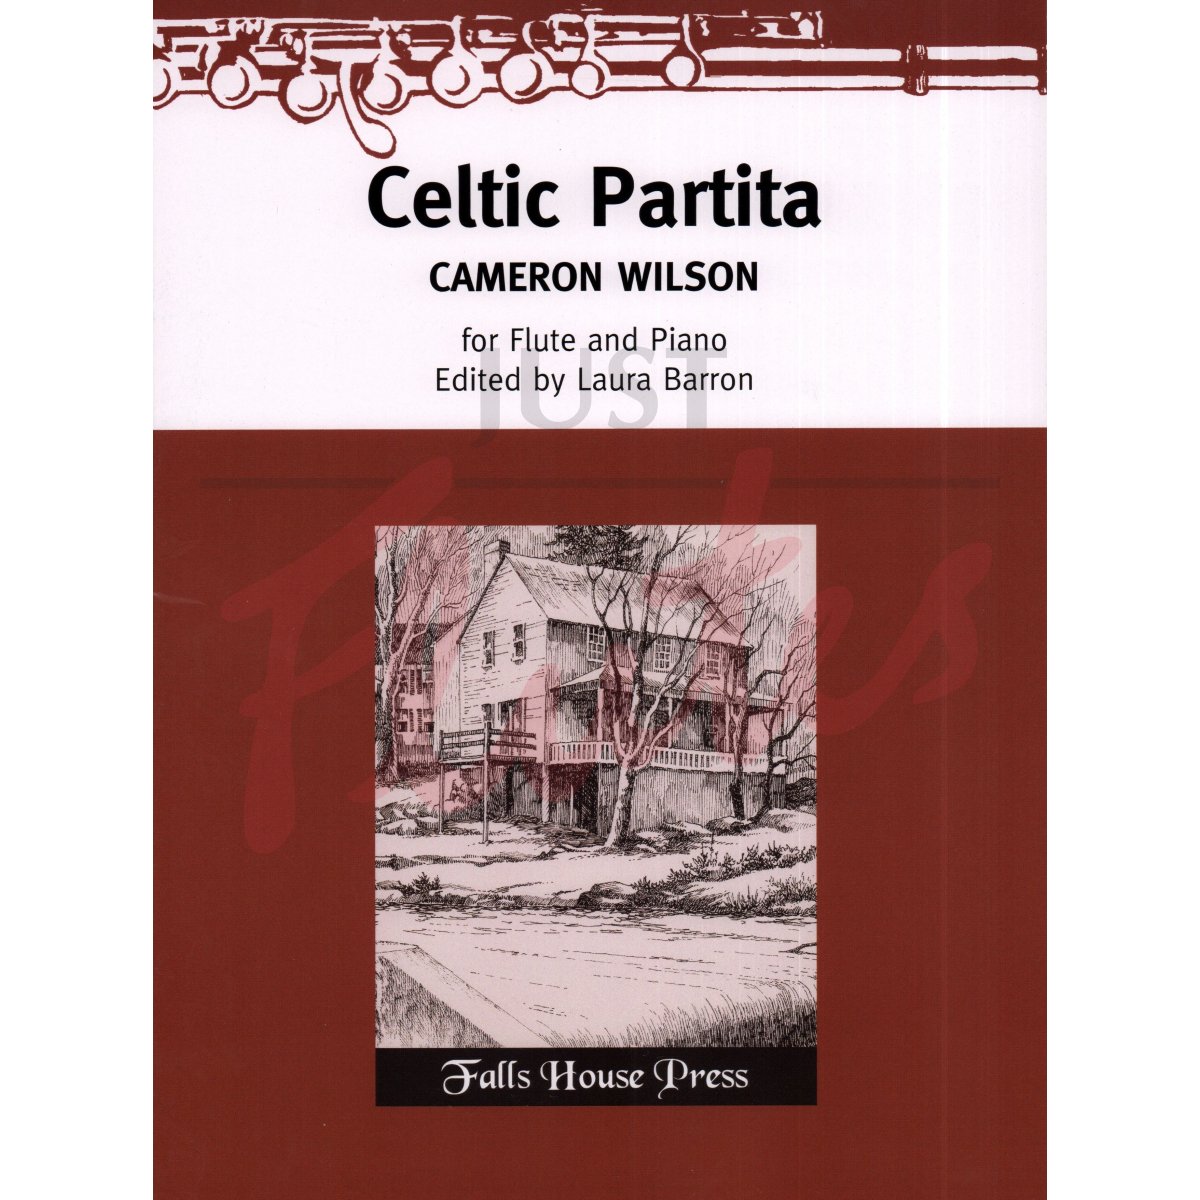 Celtic Partita for Flute and Piano